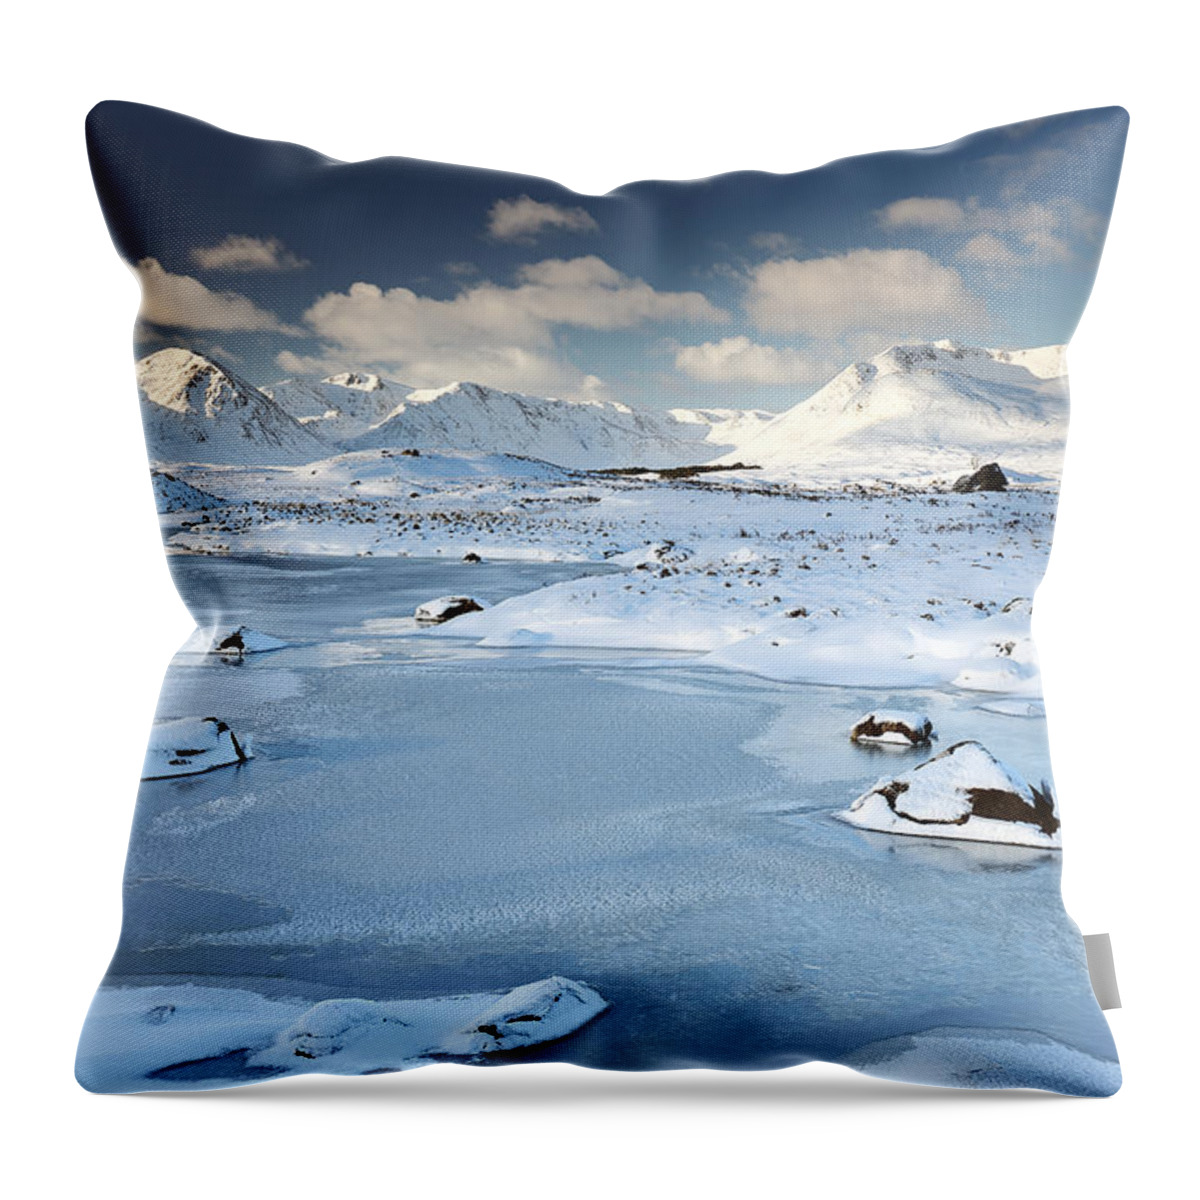 Glencoe Winter Scenery Throw Pillow featuring the photograph Glencoe winter scenery by Grant Glendinning